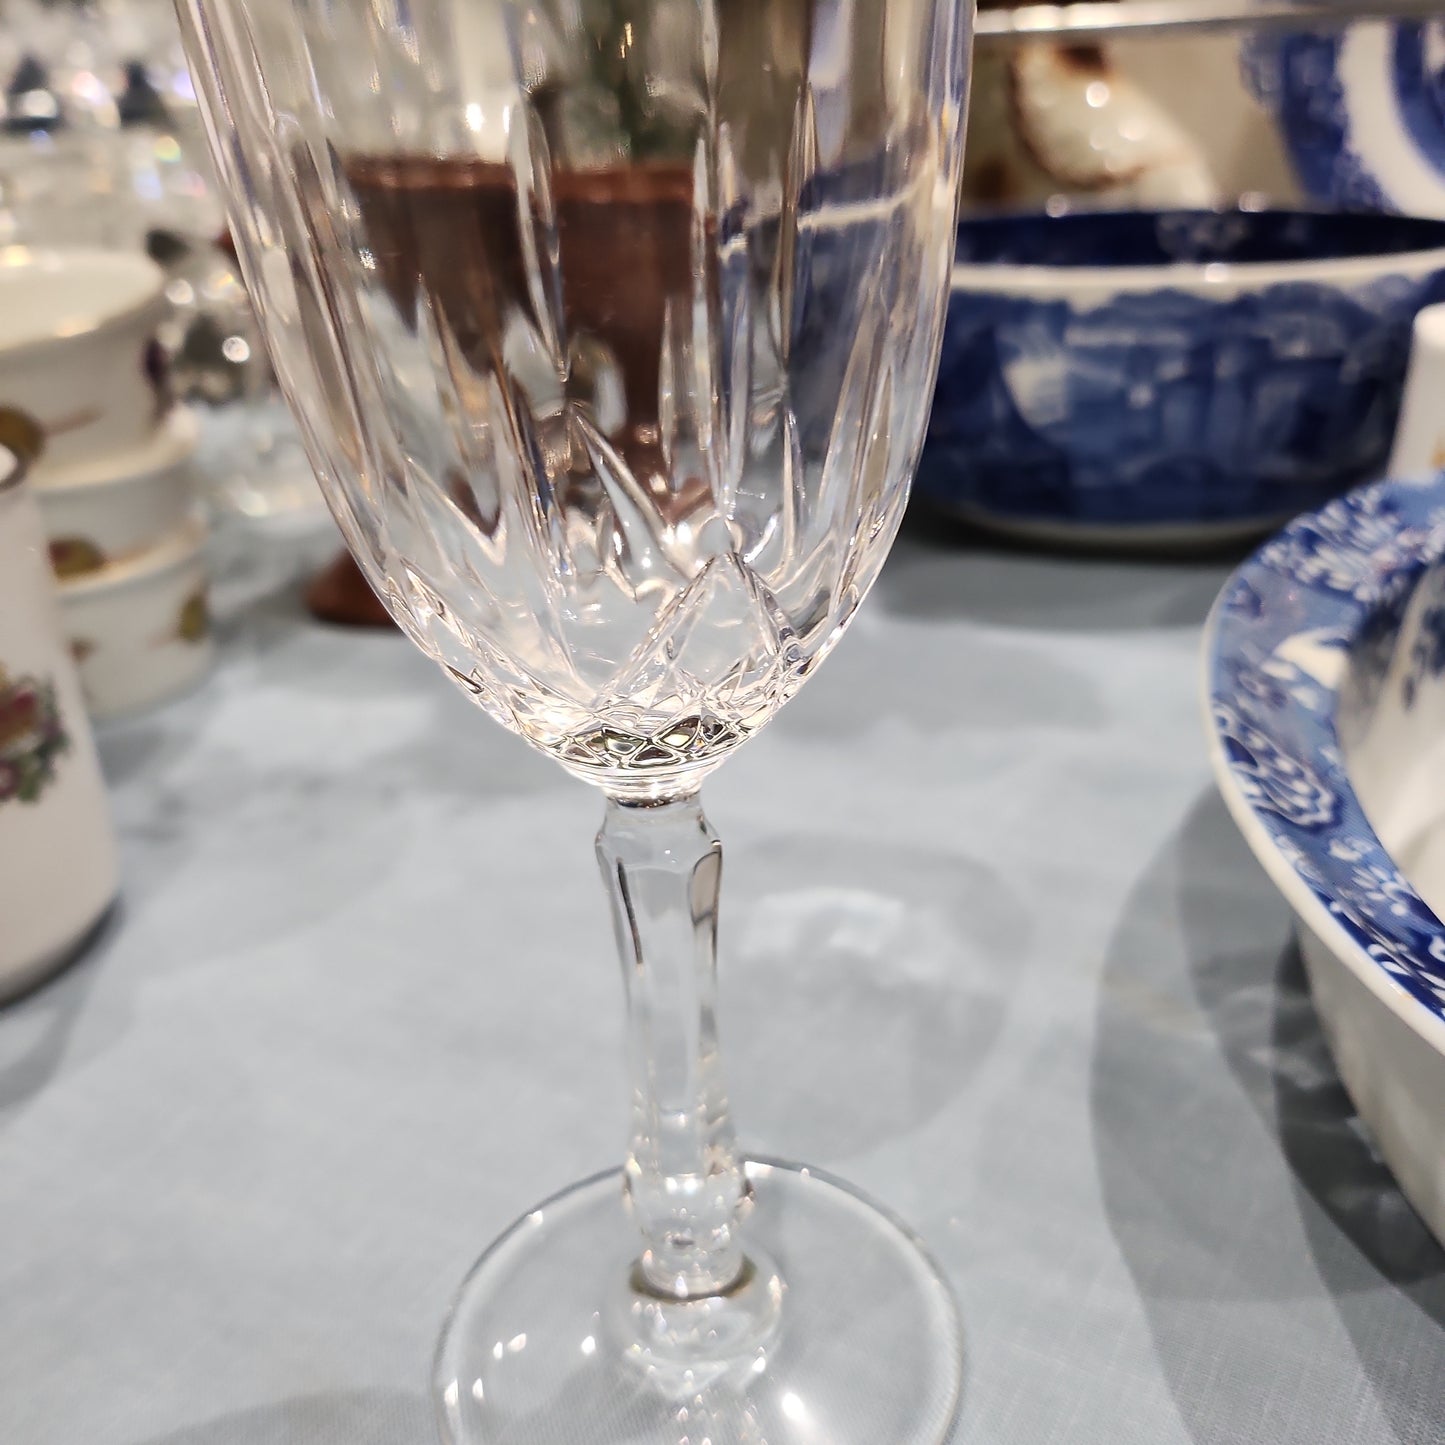 High quality crystal wine glass 6.5 x 17 cm